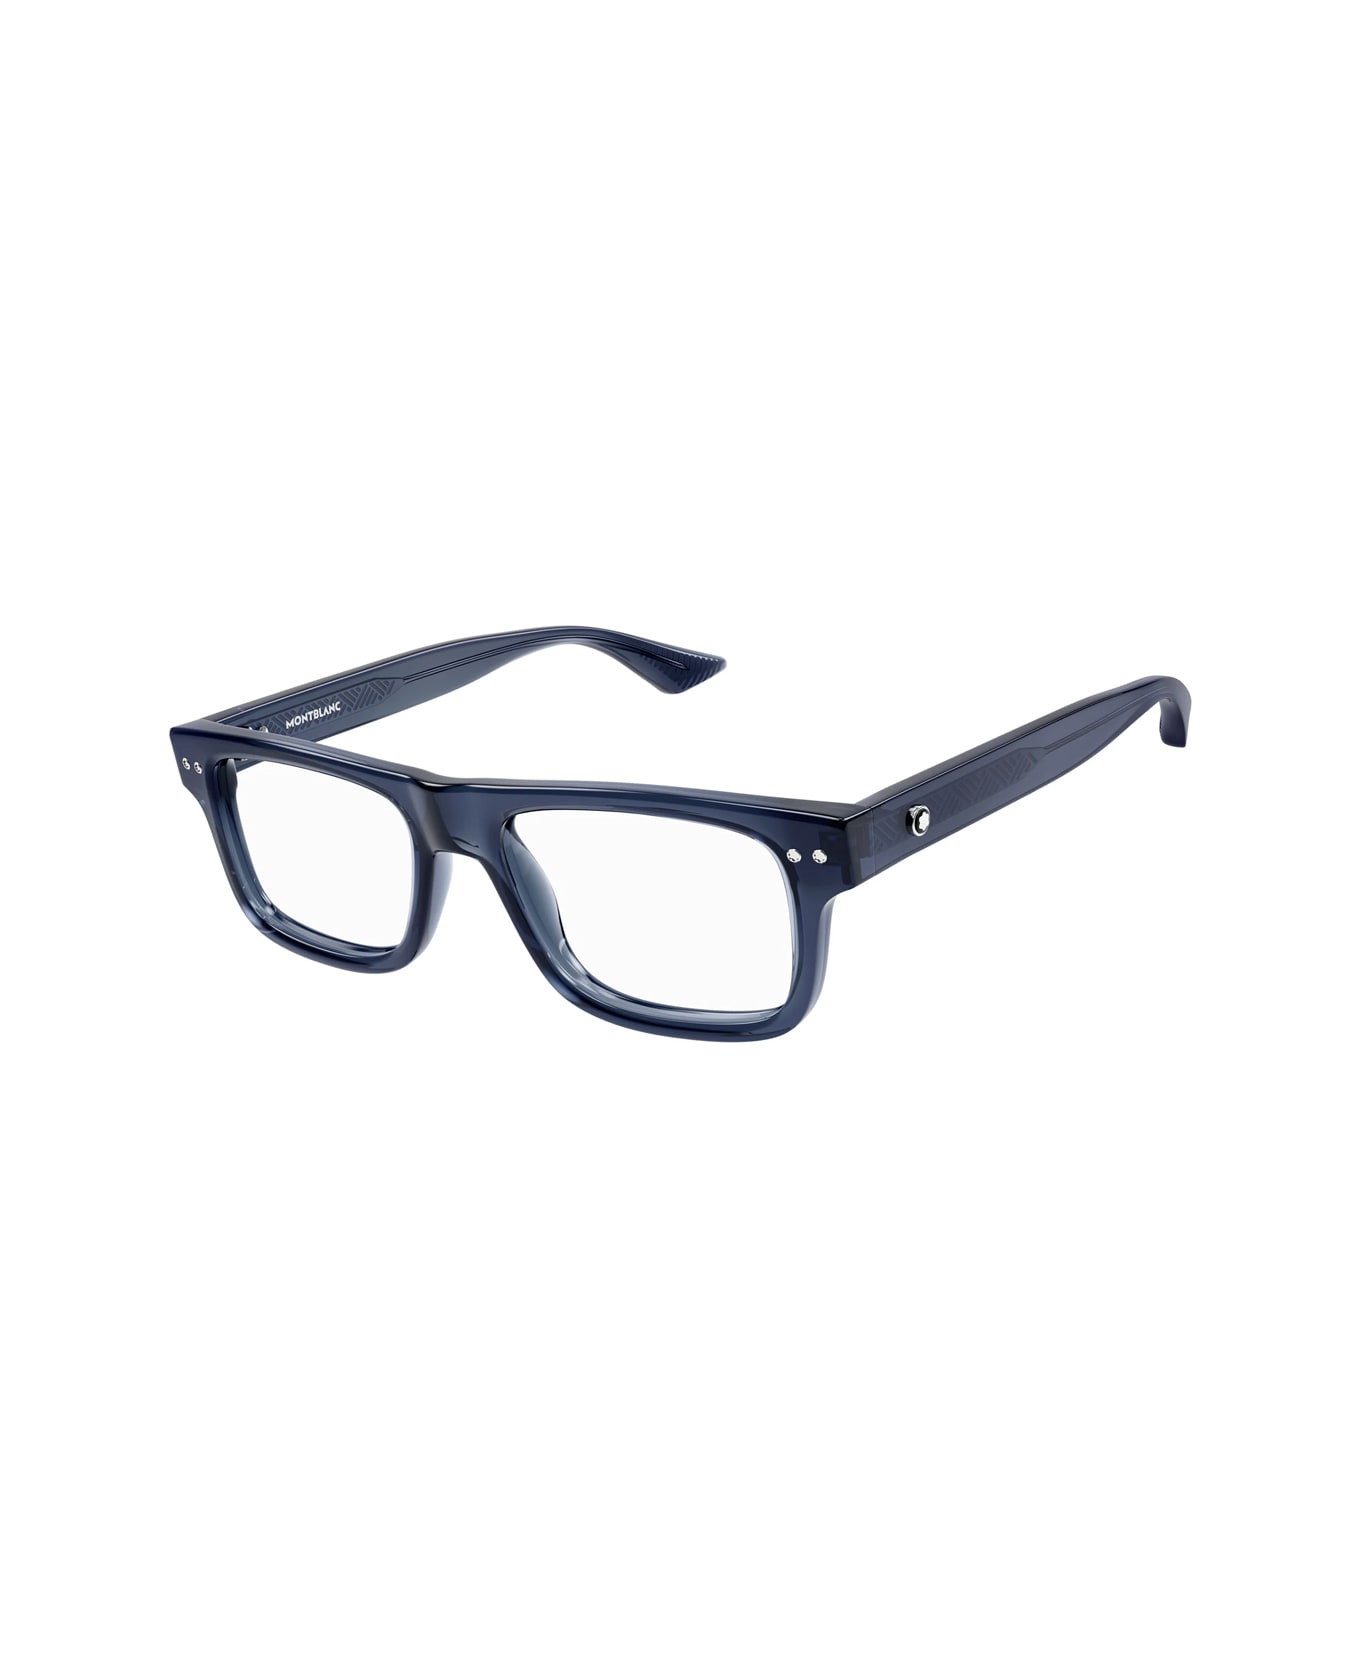 Montblanc Mb0289o 003 Glasses - Blu アイウェア